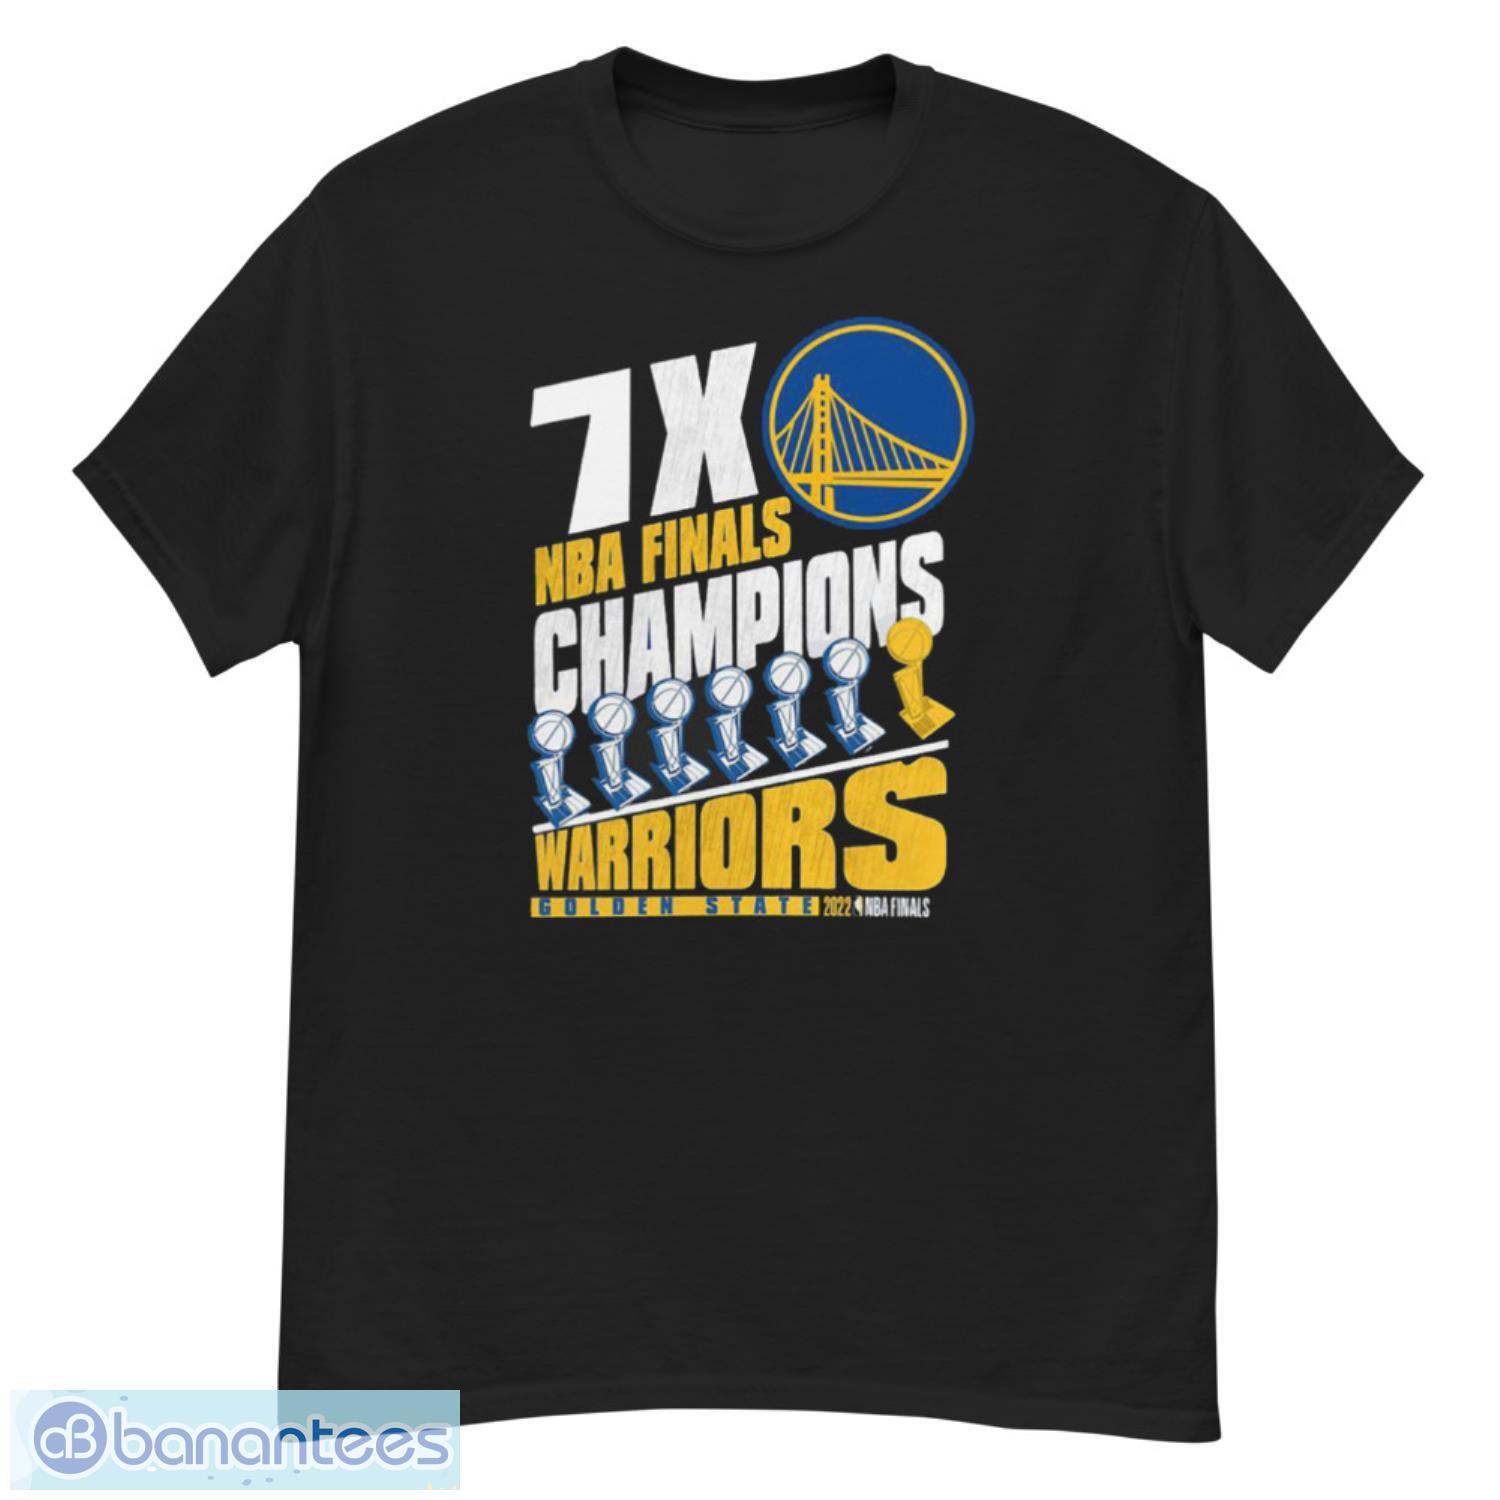 Golden State Warriors Championship Shirt, 2022 NBA Championship